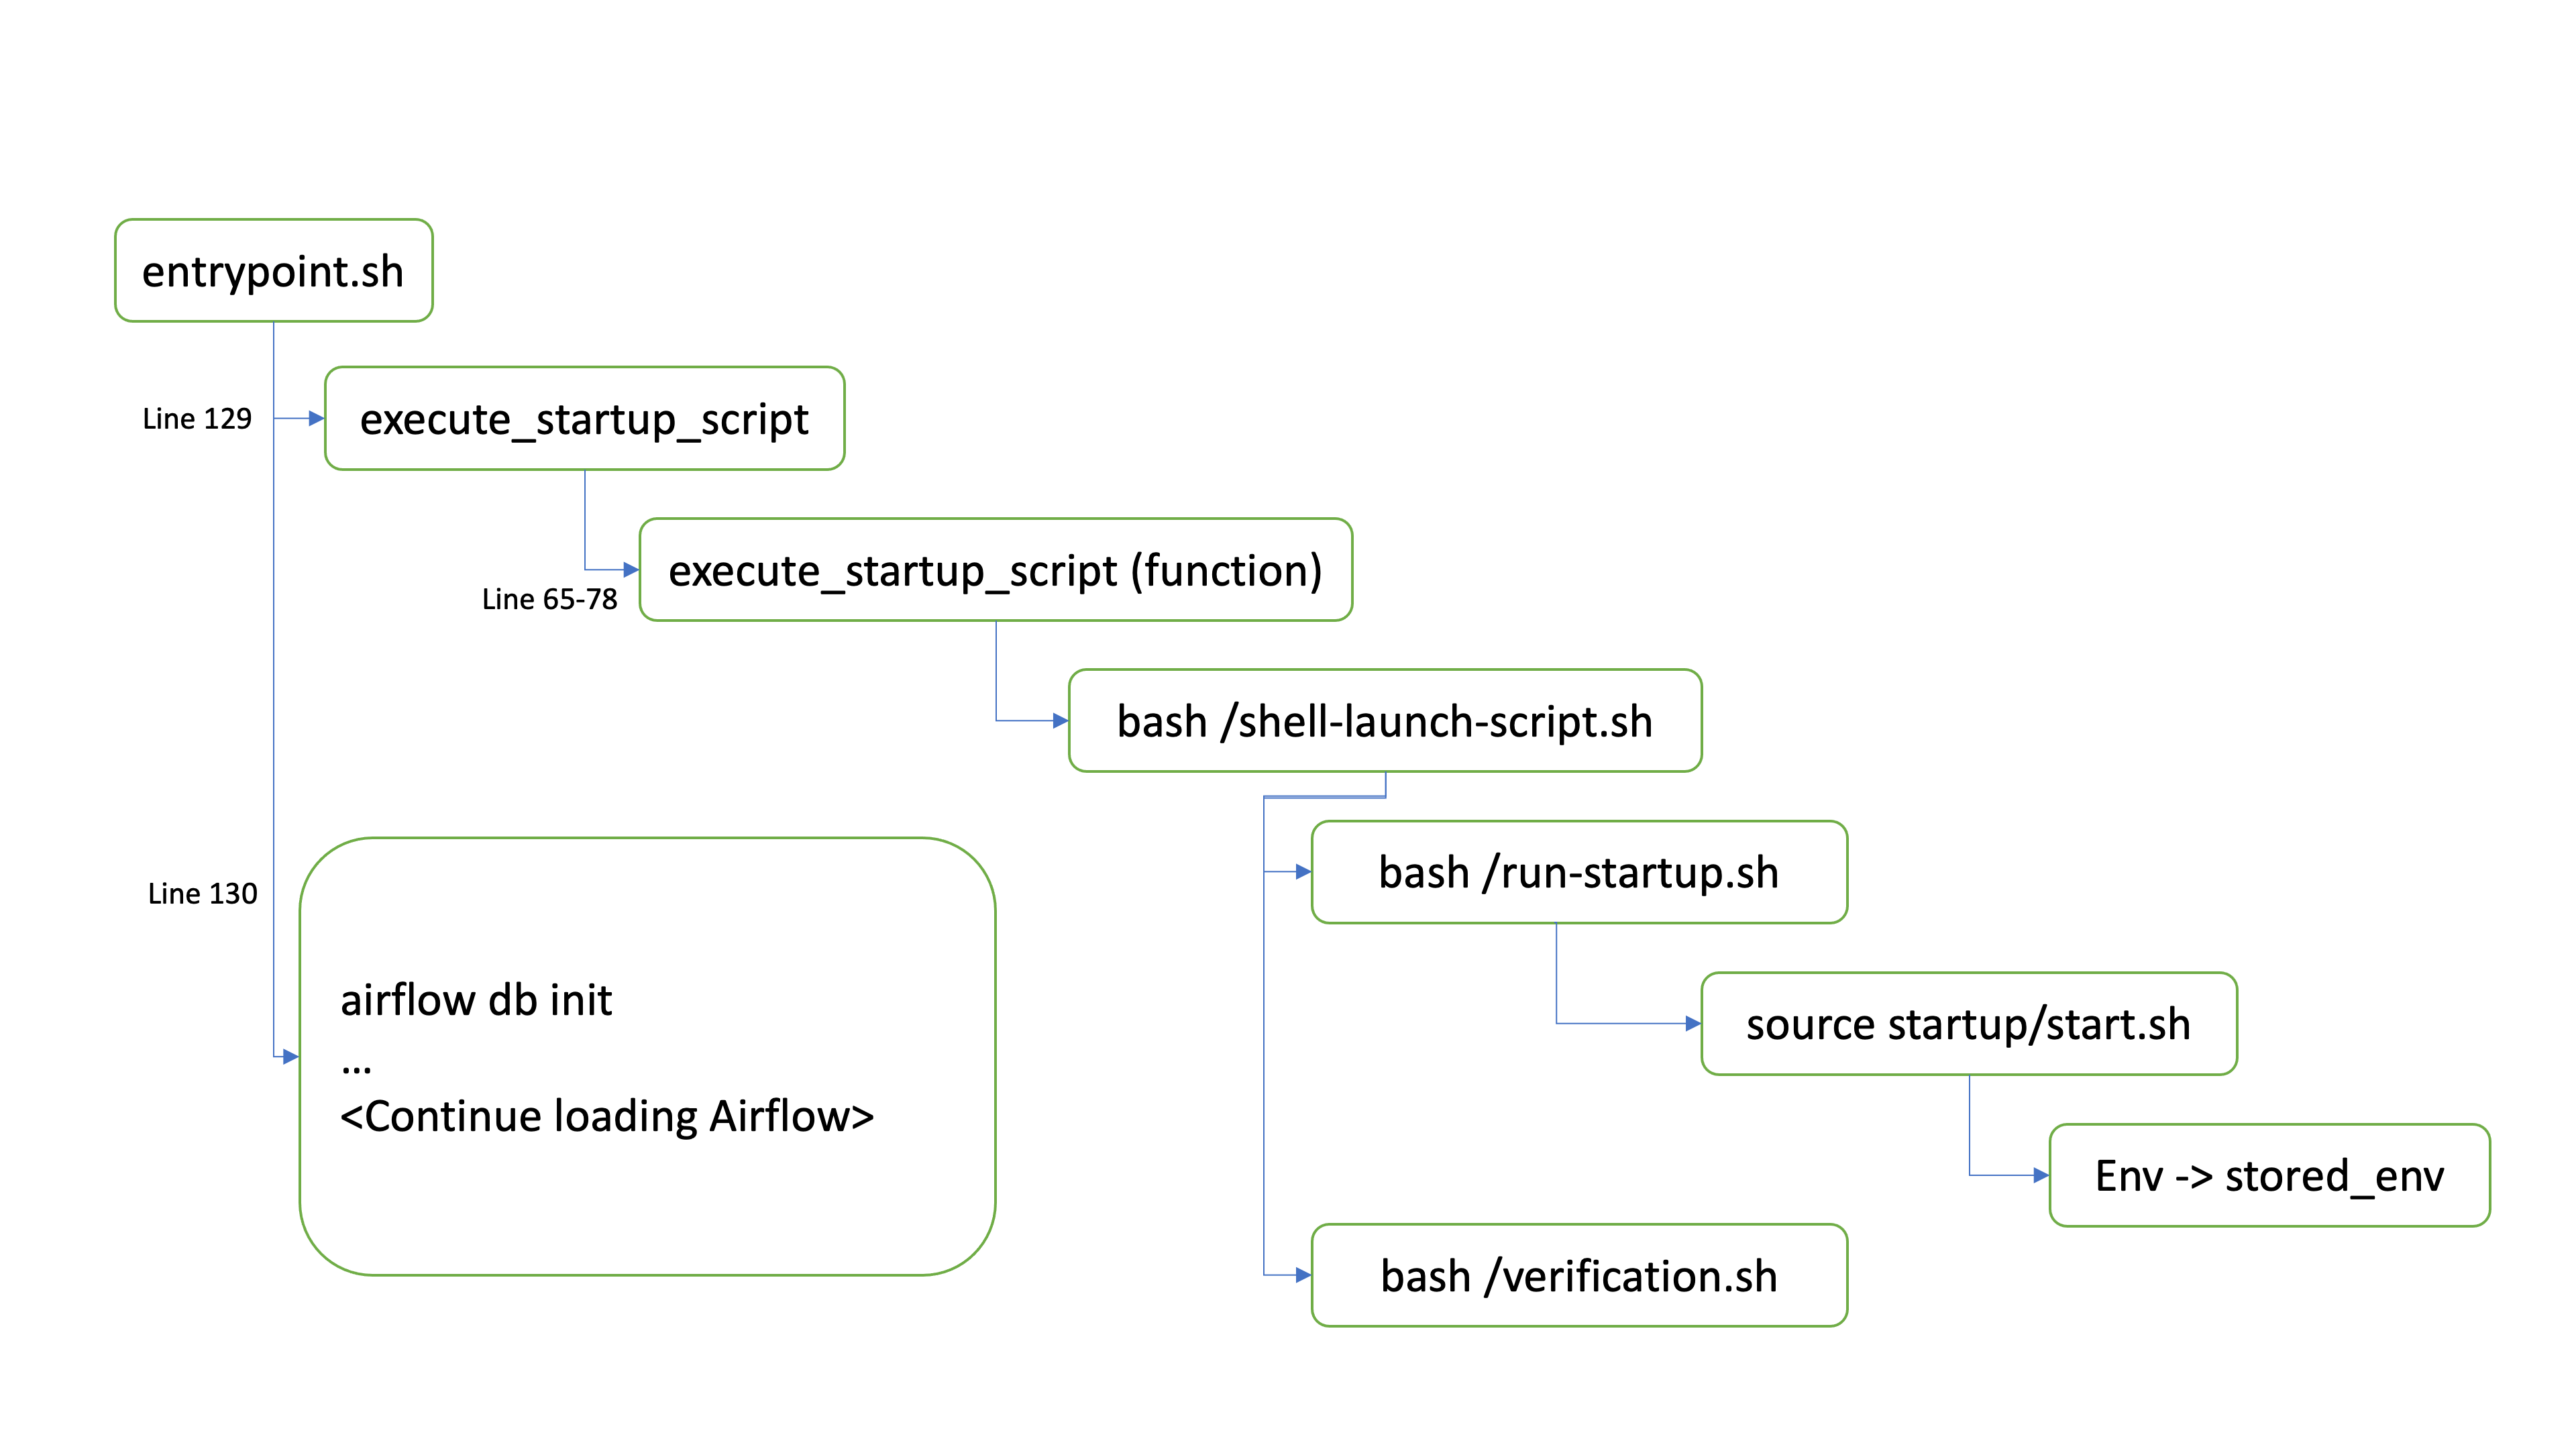 simple workflow of how startup scripts work